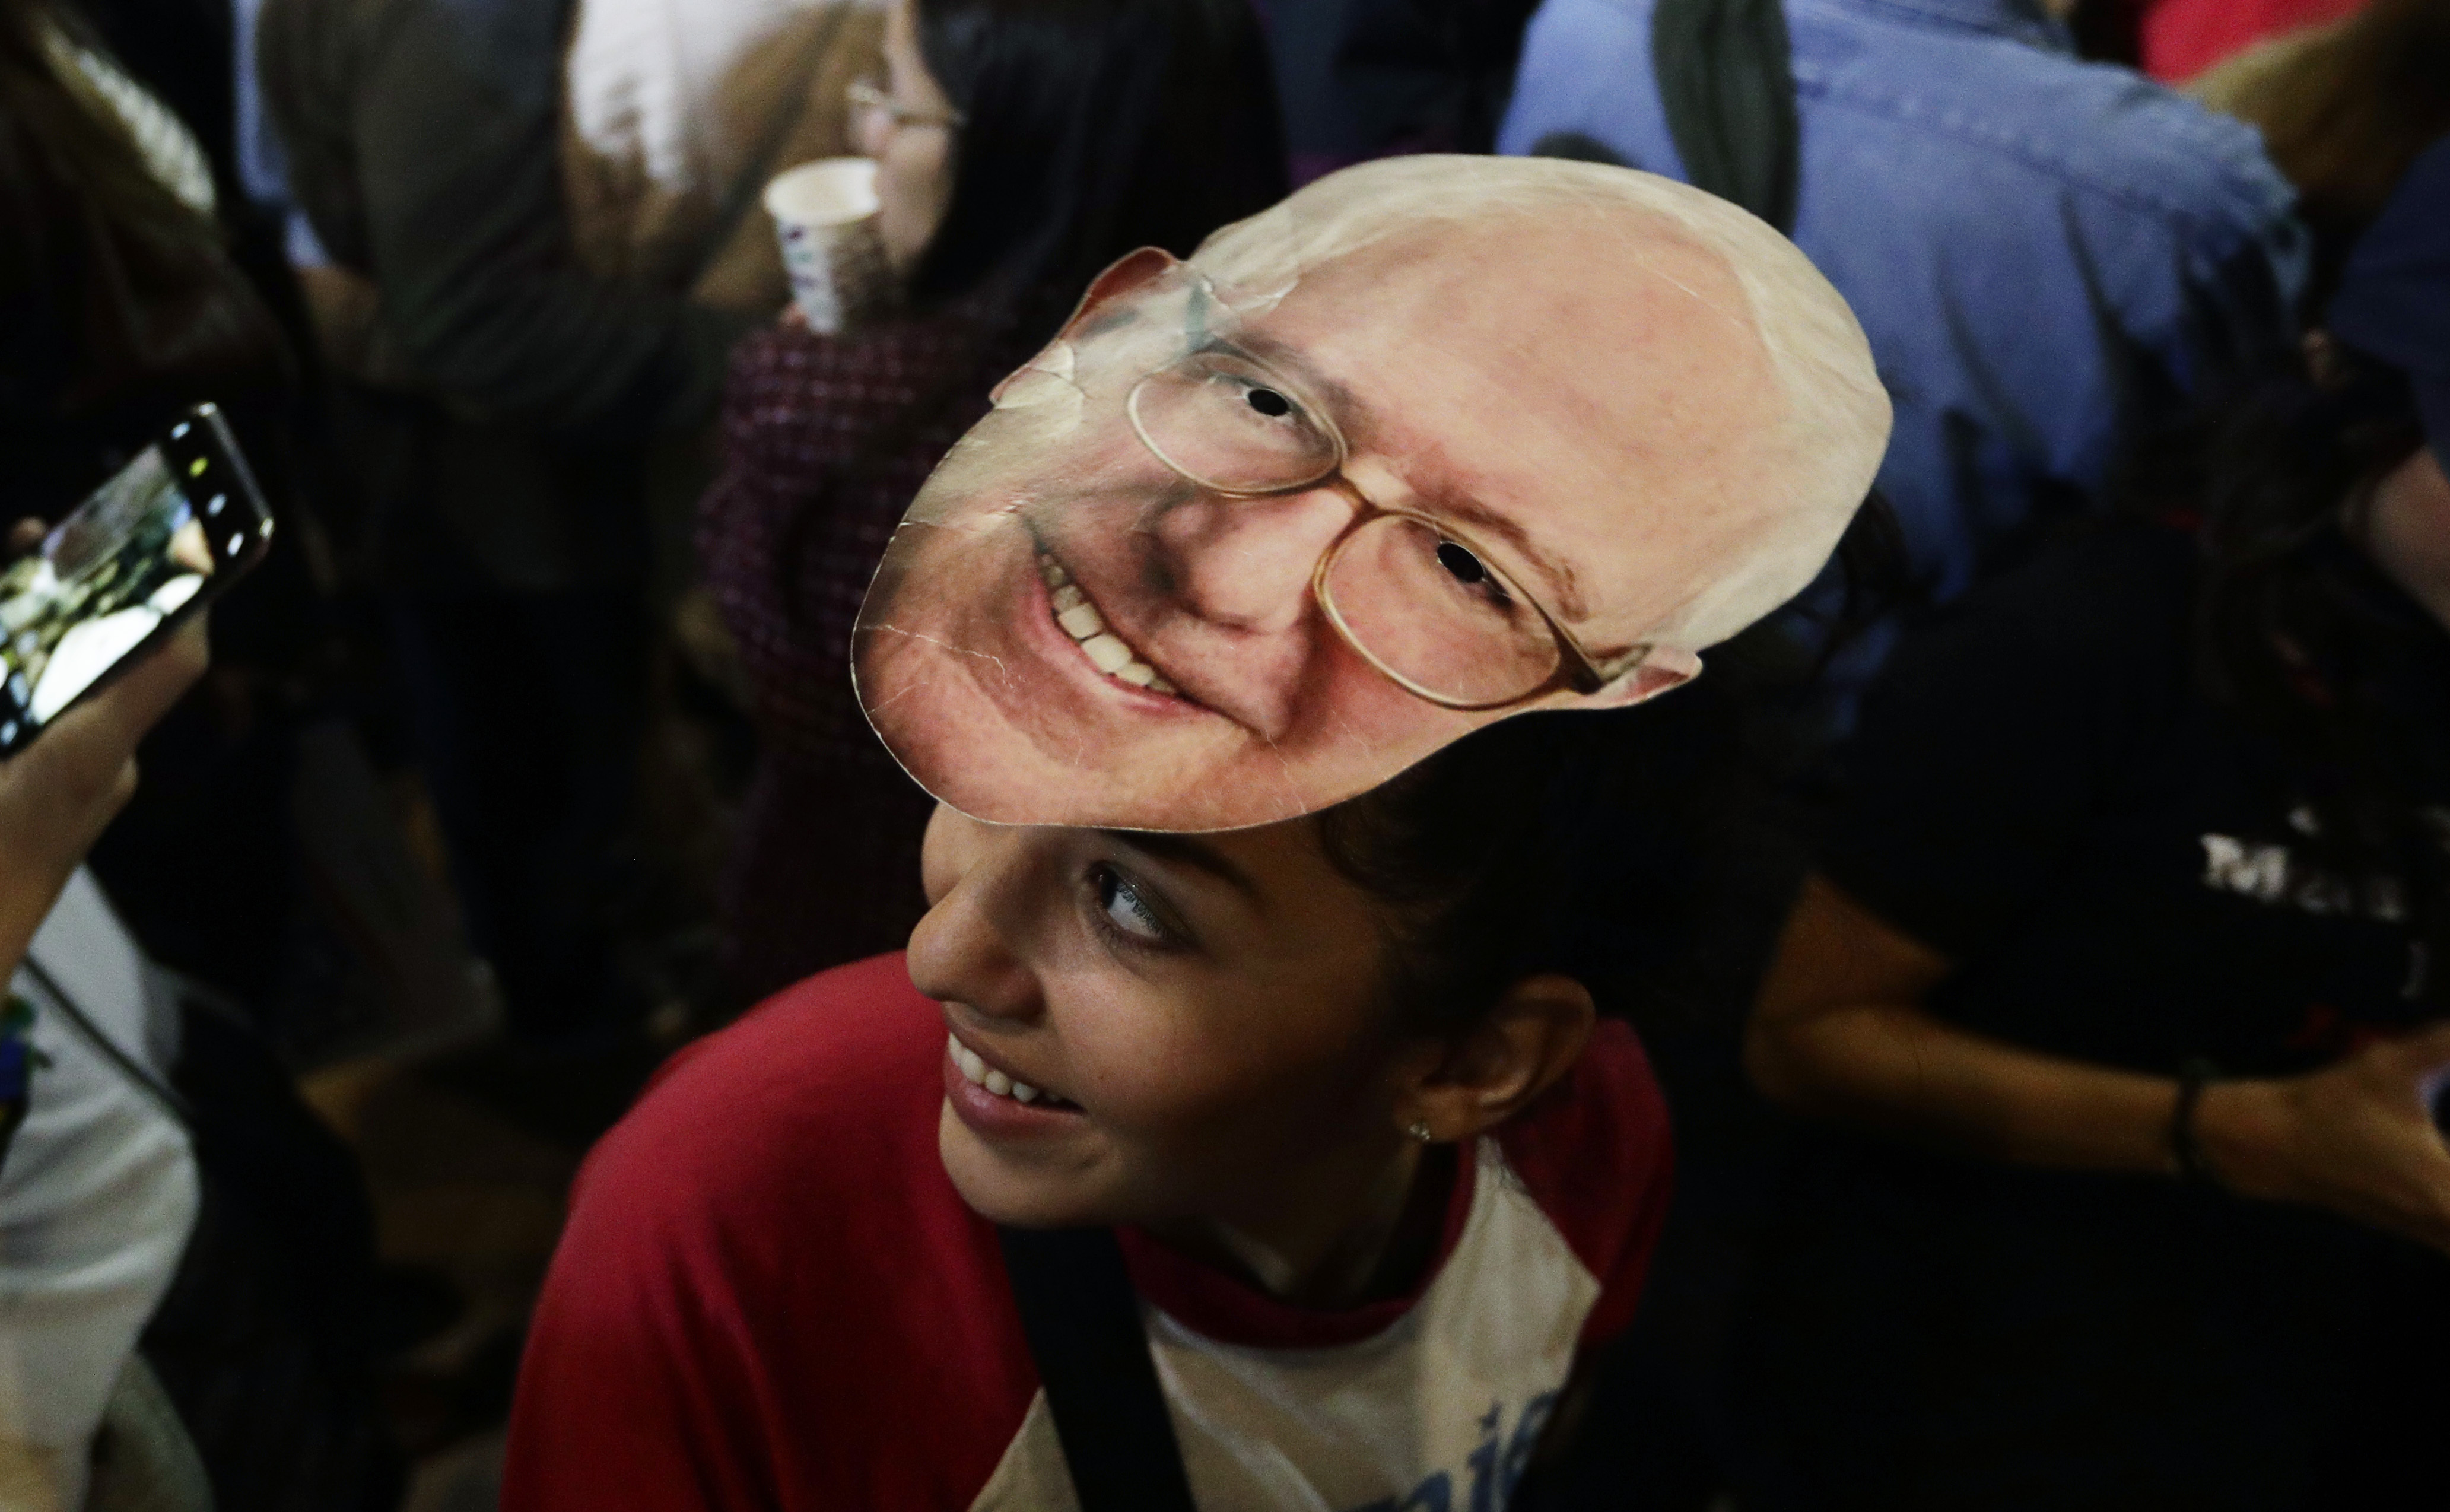 Michelle Nicoleq wears a Bernie Sanders mask as she attends a campaign event for Democratic presidential candidate Sen. Bernie Sanders, I-Vt., in San Antonio, Saturday, Feb. 22, 2020. (AP Photo/Eric Gay)